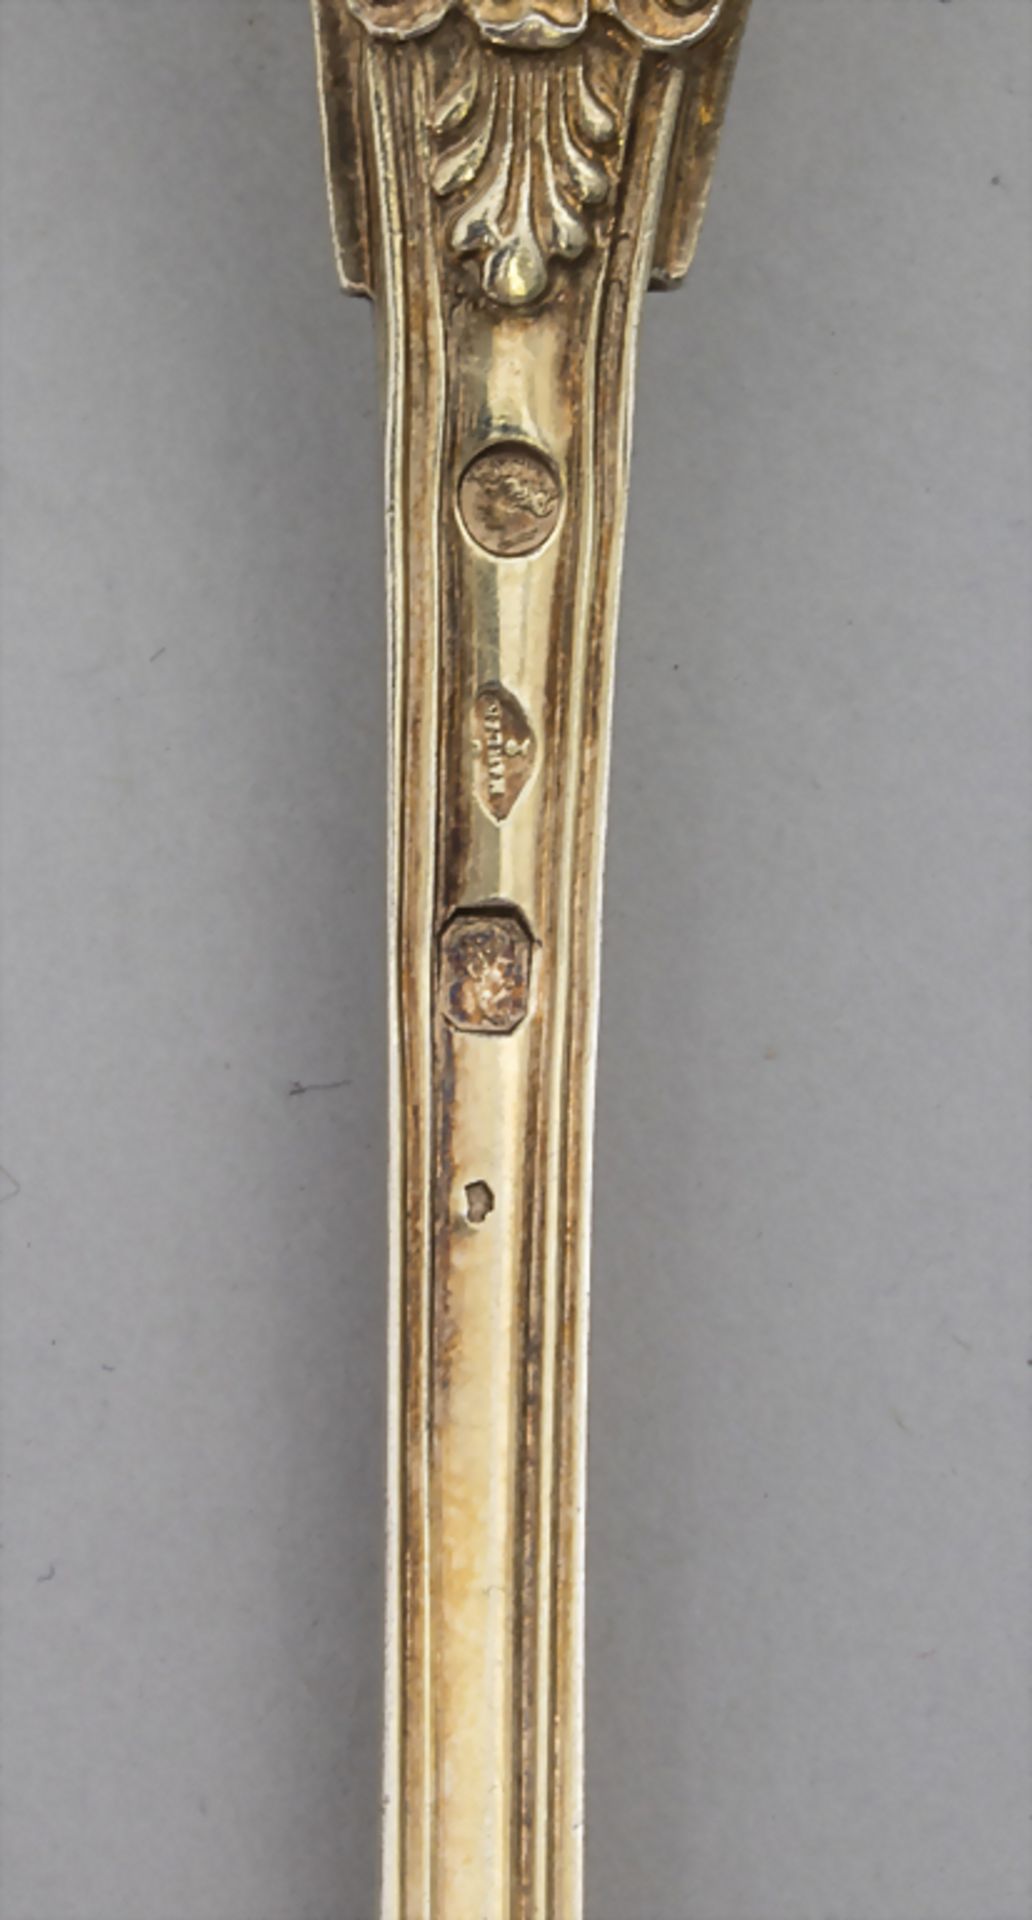 36 tlg. Silberbesteck / A 36-piece set of silver cutlery, Charles Salomon Mahler, Paris, 1824-18 - Bild 15 aus 15